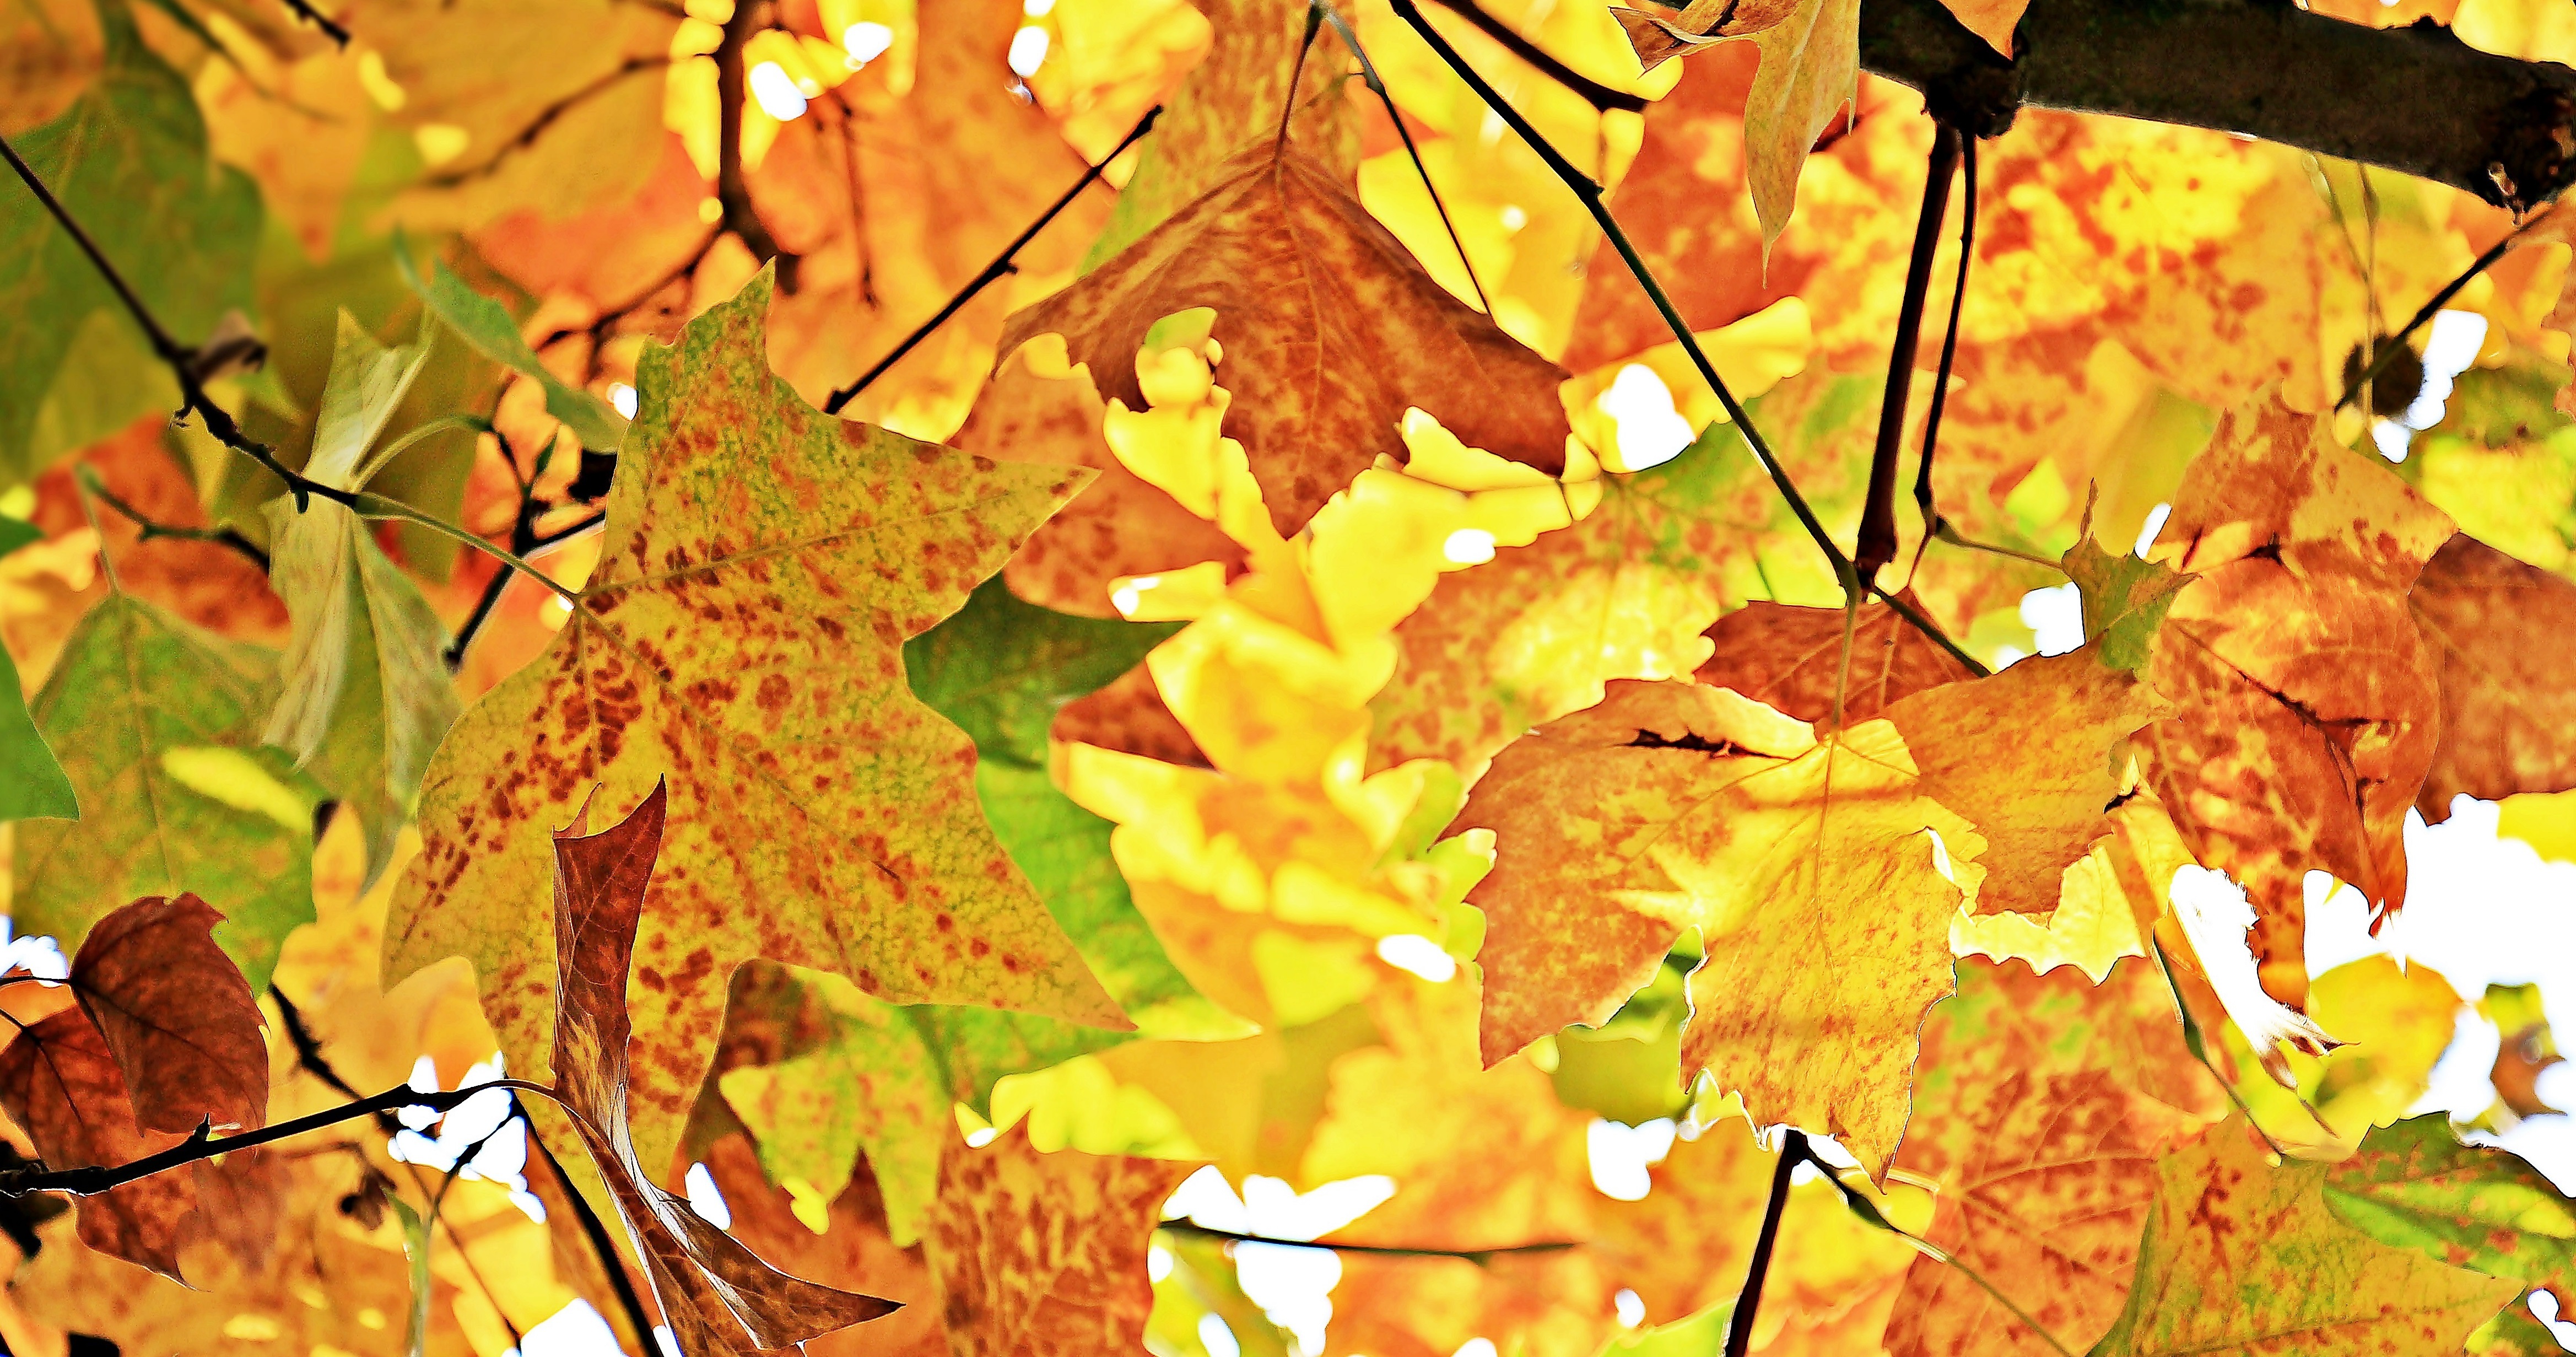 120943 descargar imagen naturaleza, otoño, madera, árbol, sucursales, ramas, follaje, arce: fondos de pantalla y protectores de pantalla gratis